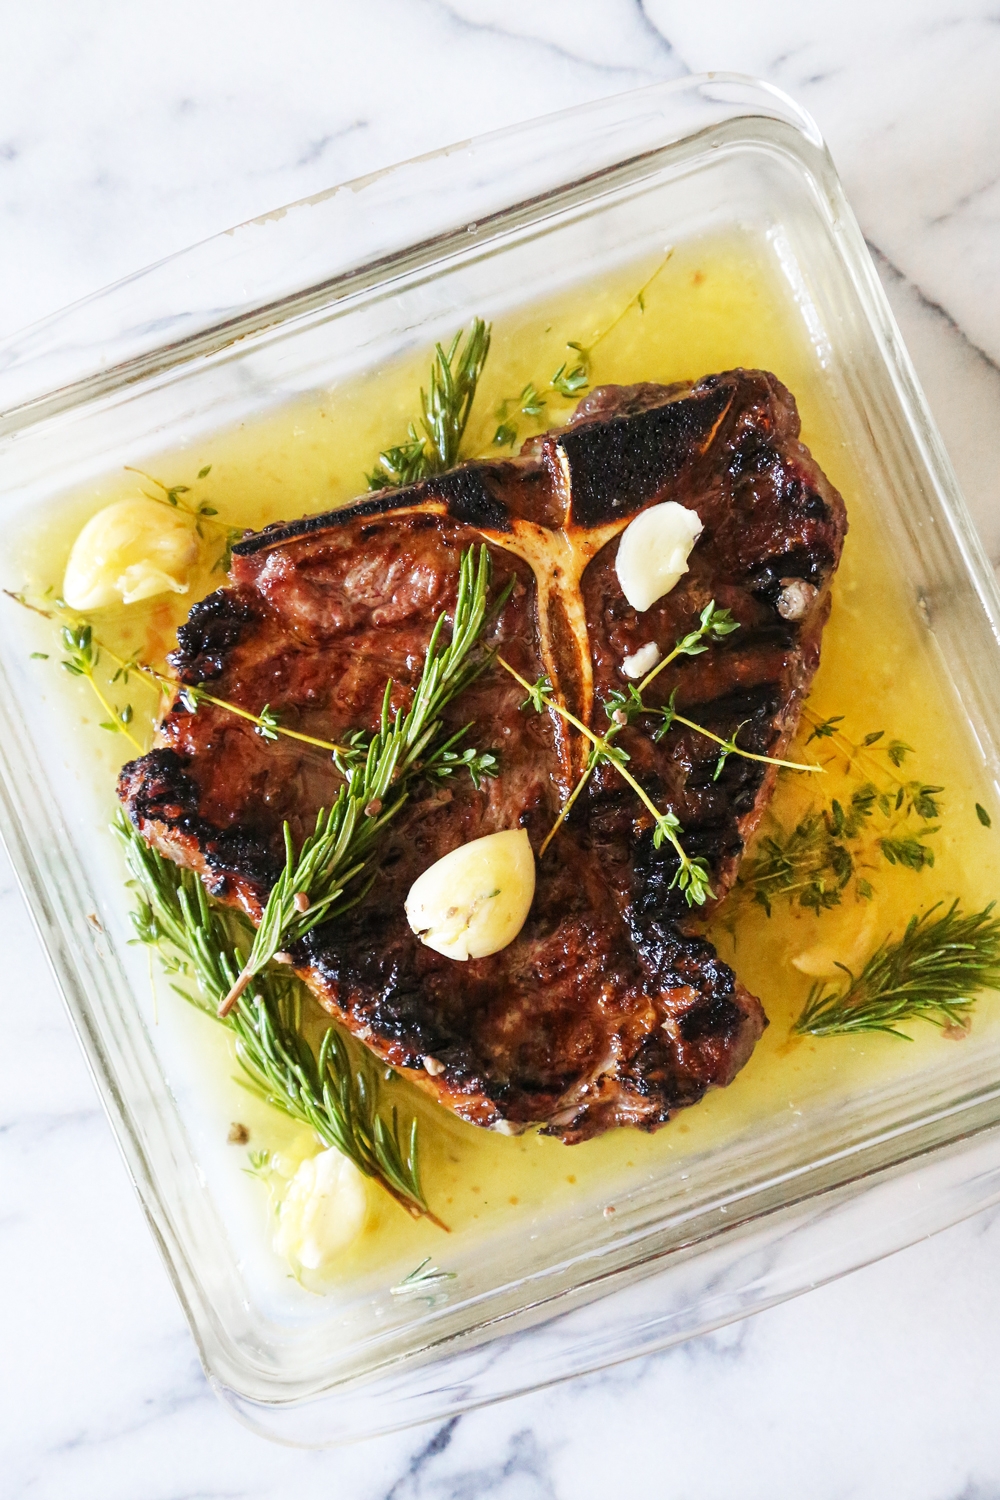 https://www.kitchenkonfidence.com/wp-content/uploads/2014/05/Grilled-Dry-Aged-Steak.jpg